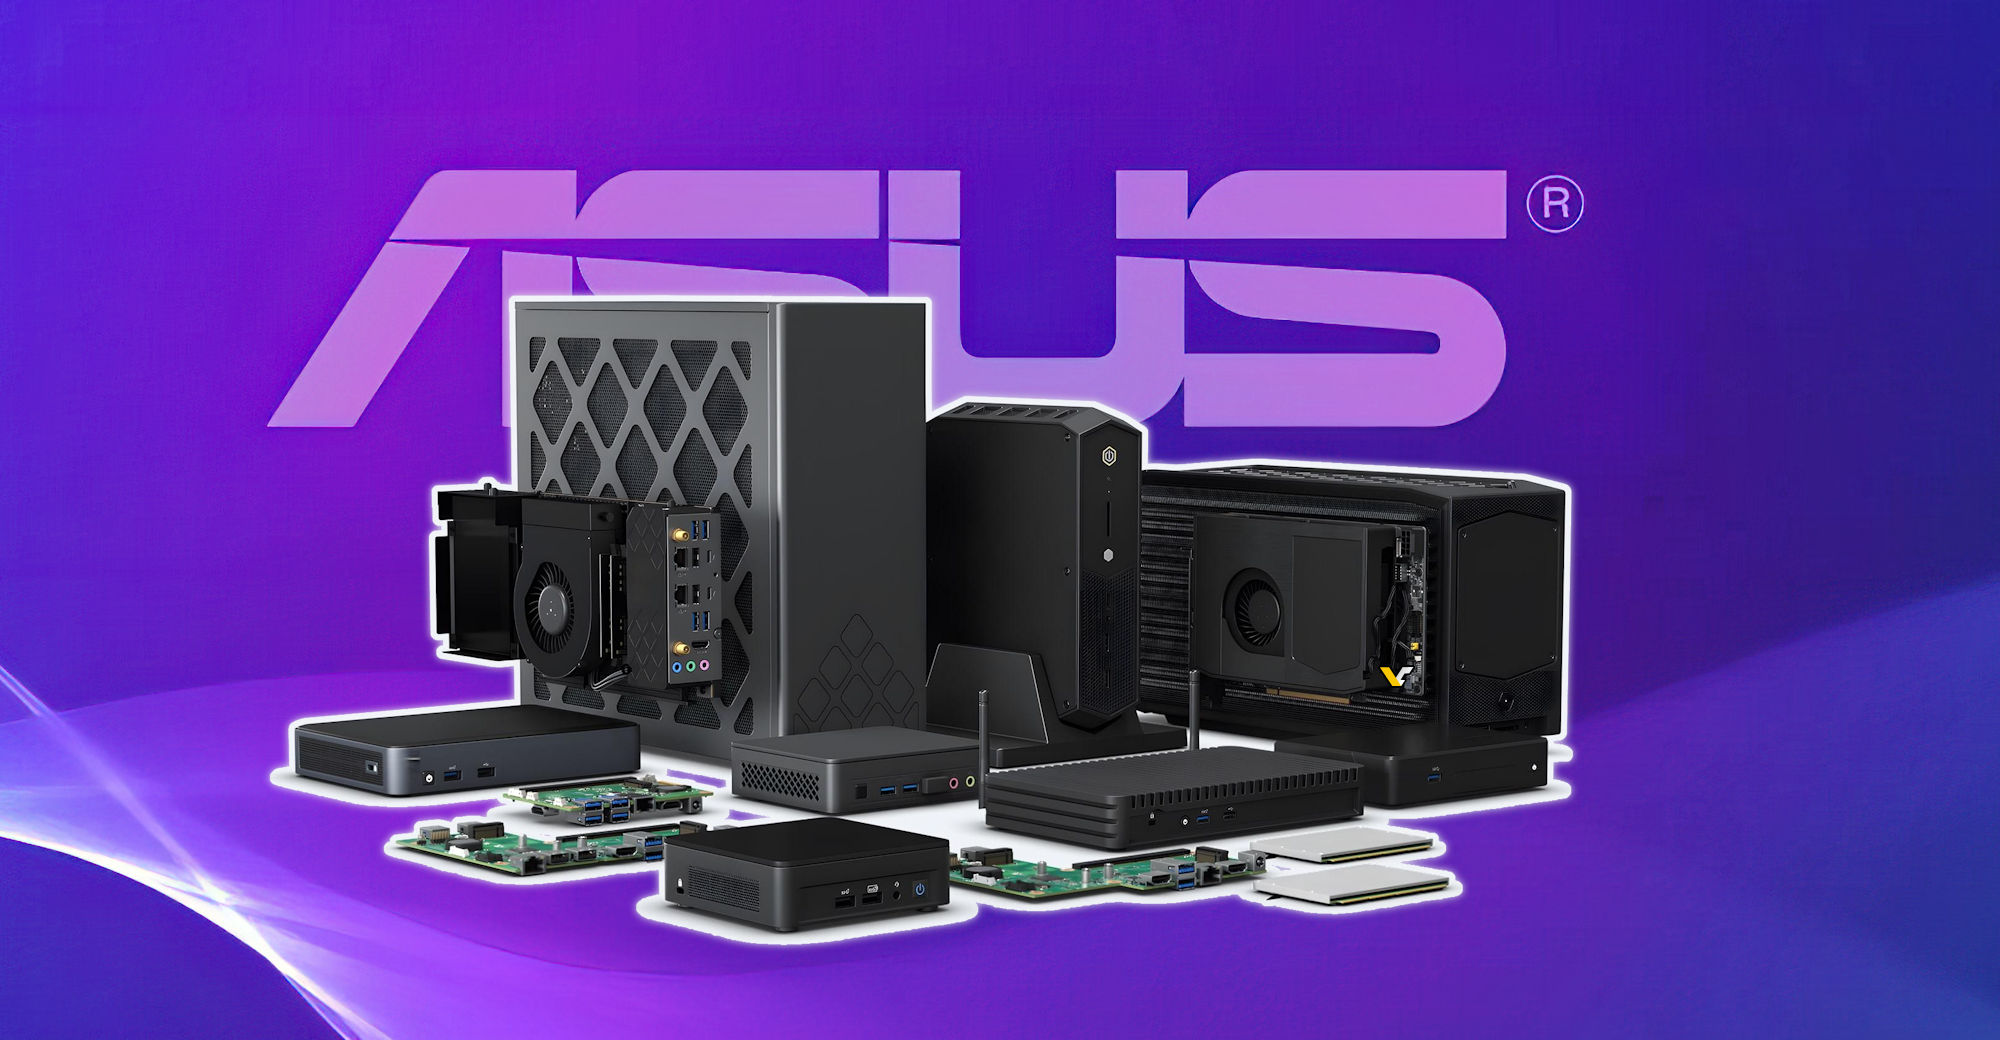 Asus rumored to prepare next gen ROG NUC Extreme mini PCs with